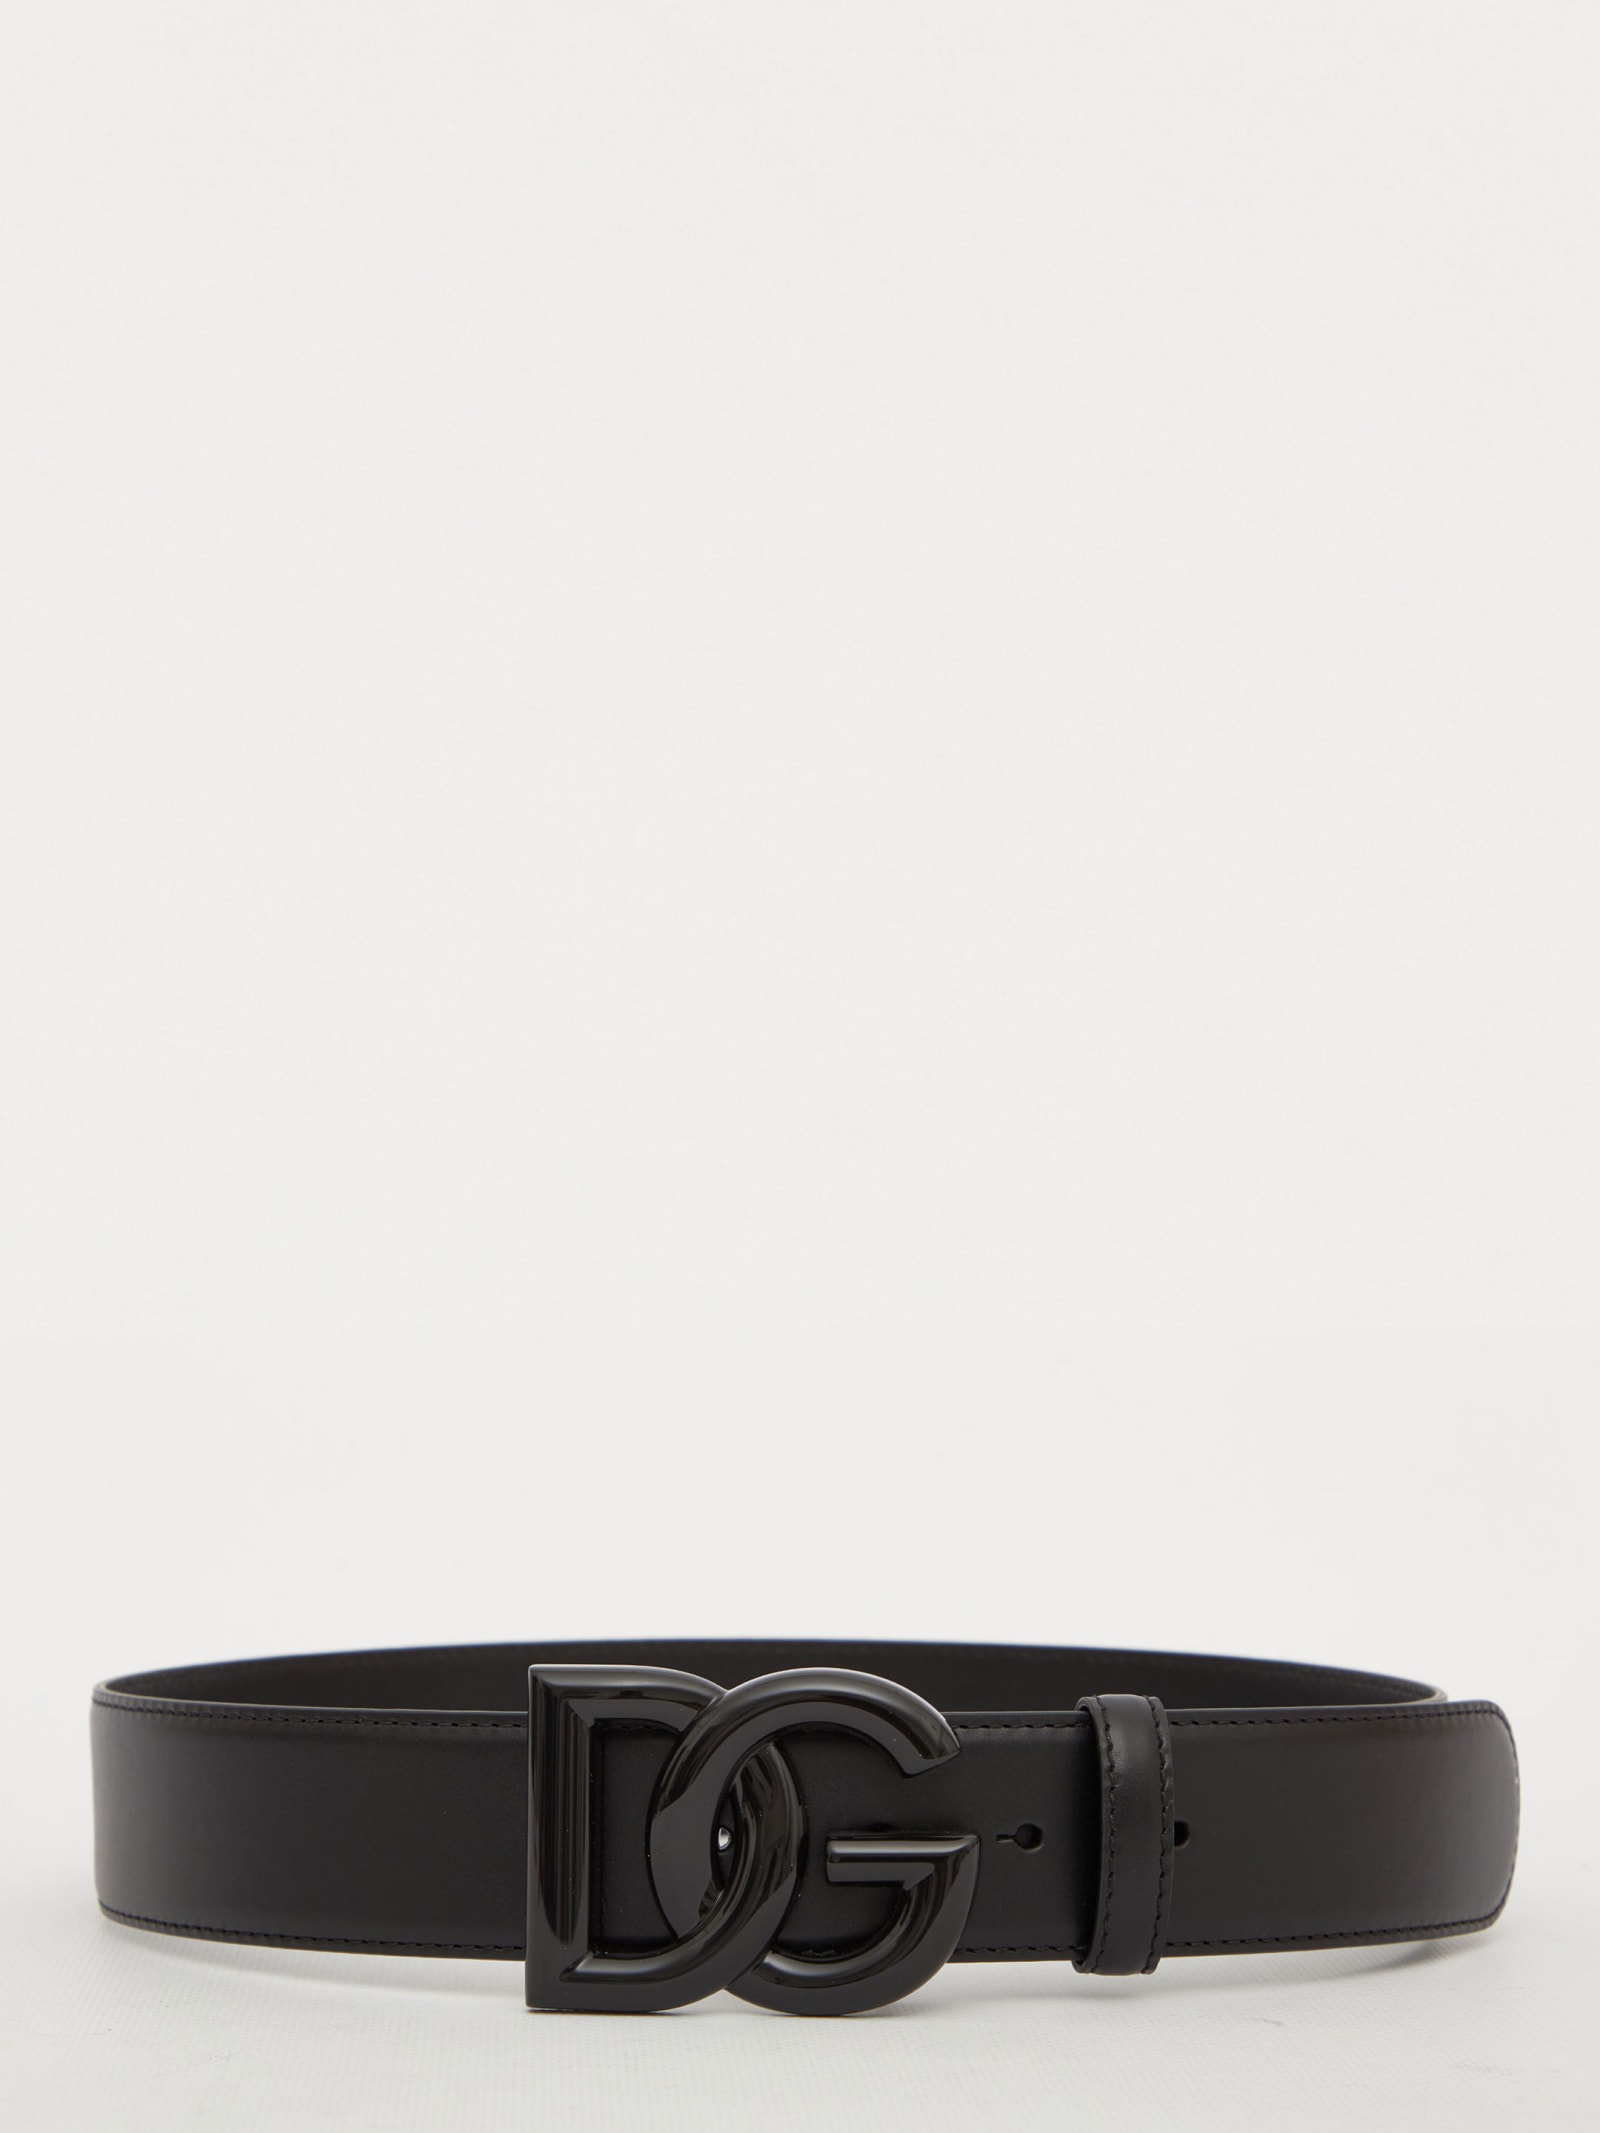 Dolce & Gabbana Dg Black Leather Belt